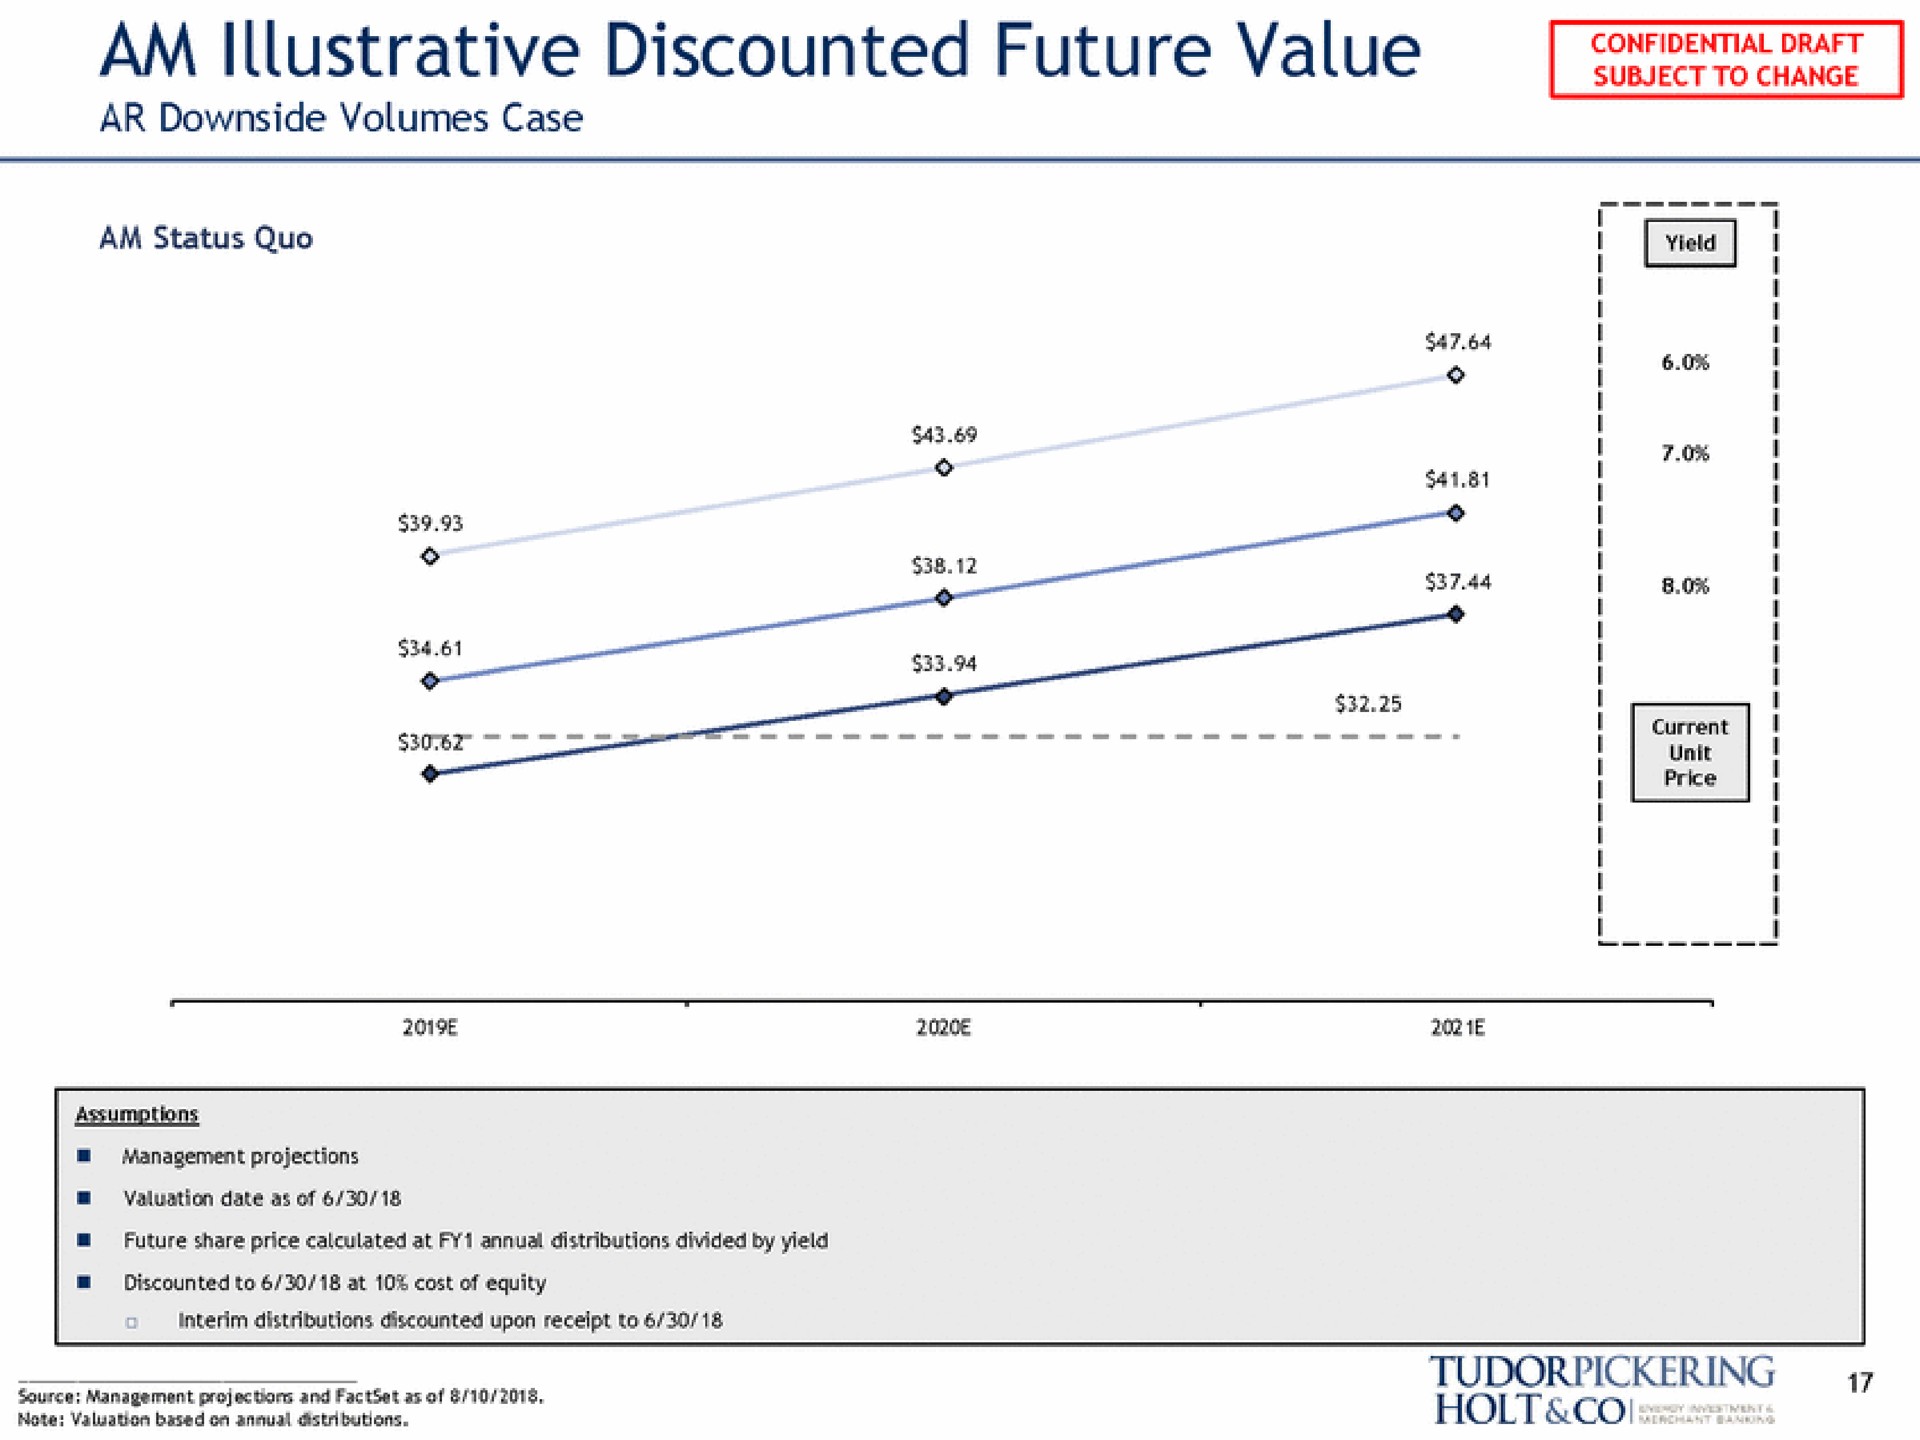 am illustrative discounted future value a coaster holt | Tudor, Pickering, Holt & Co